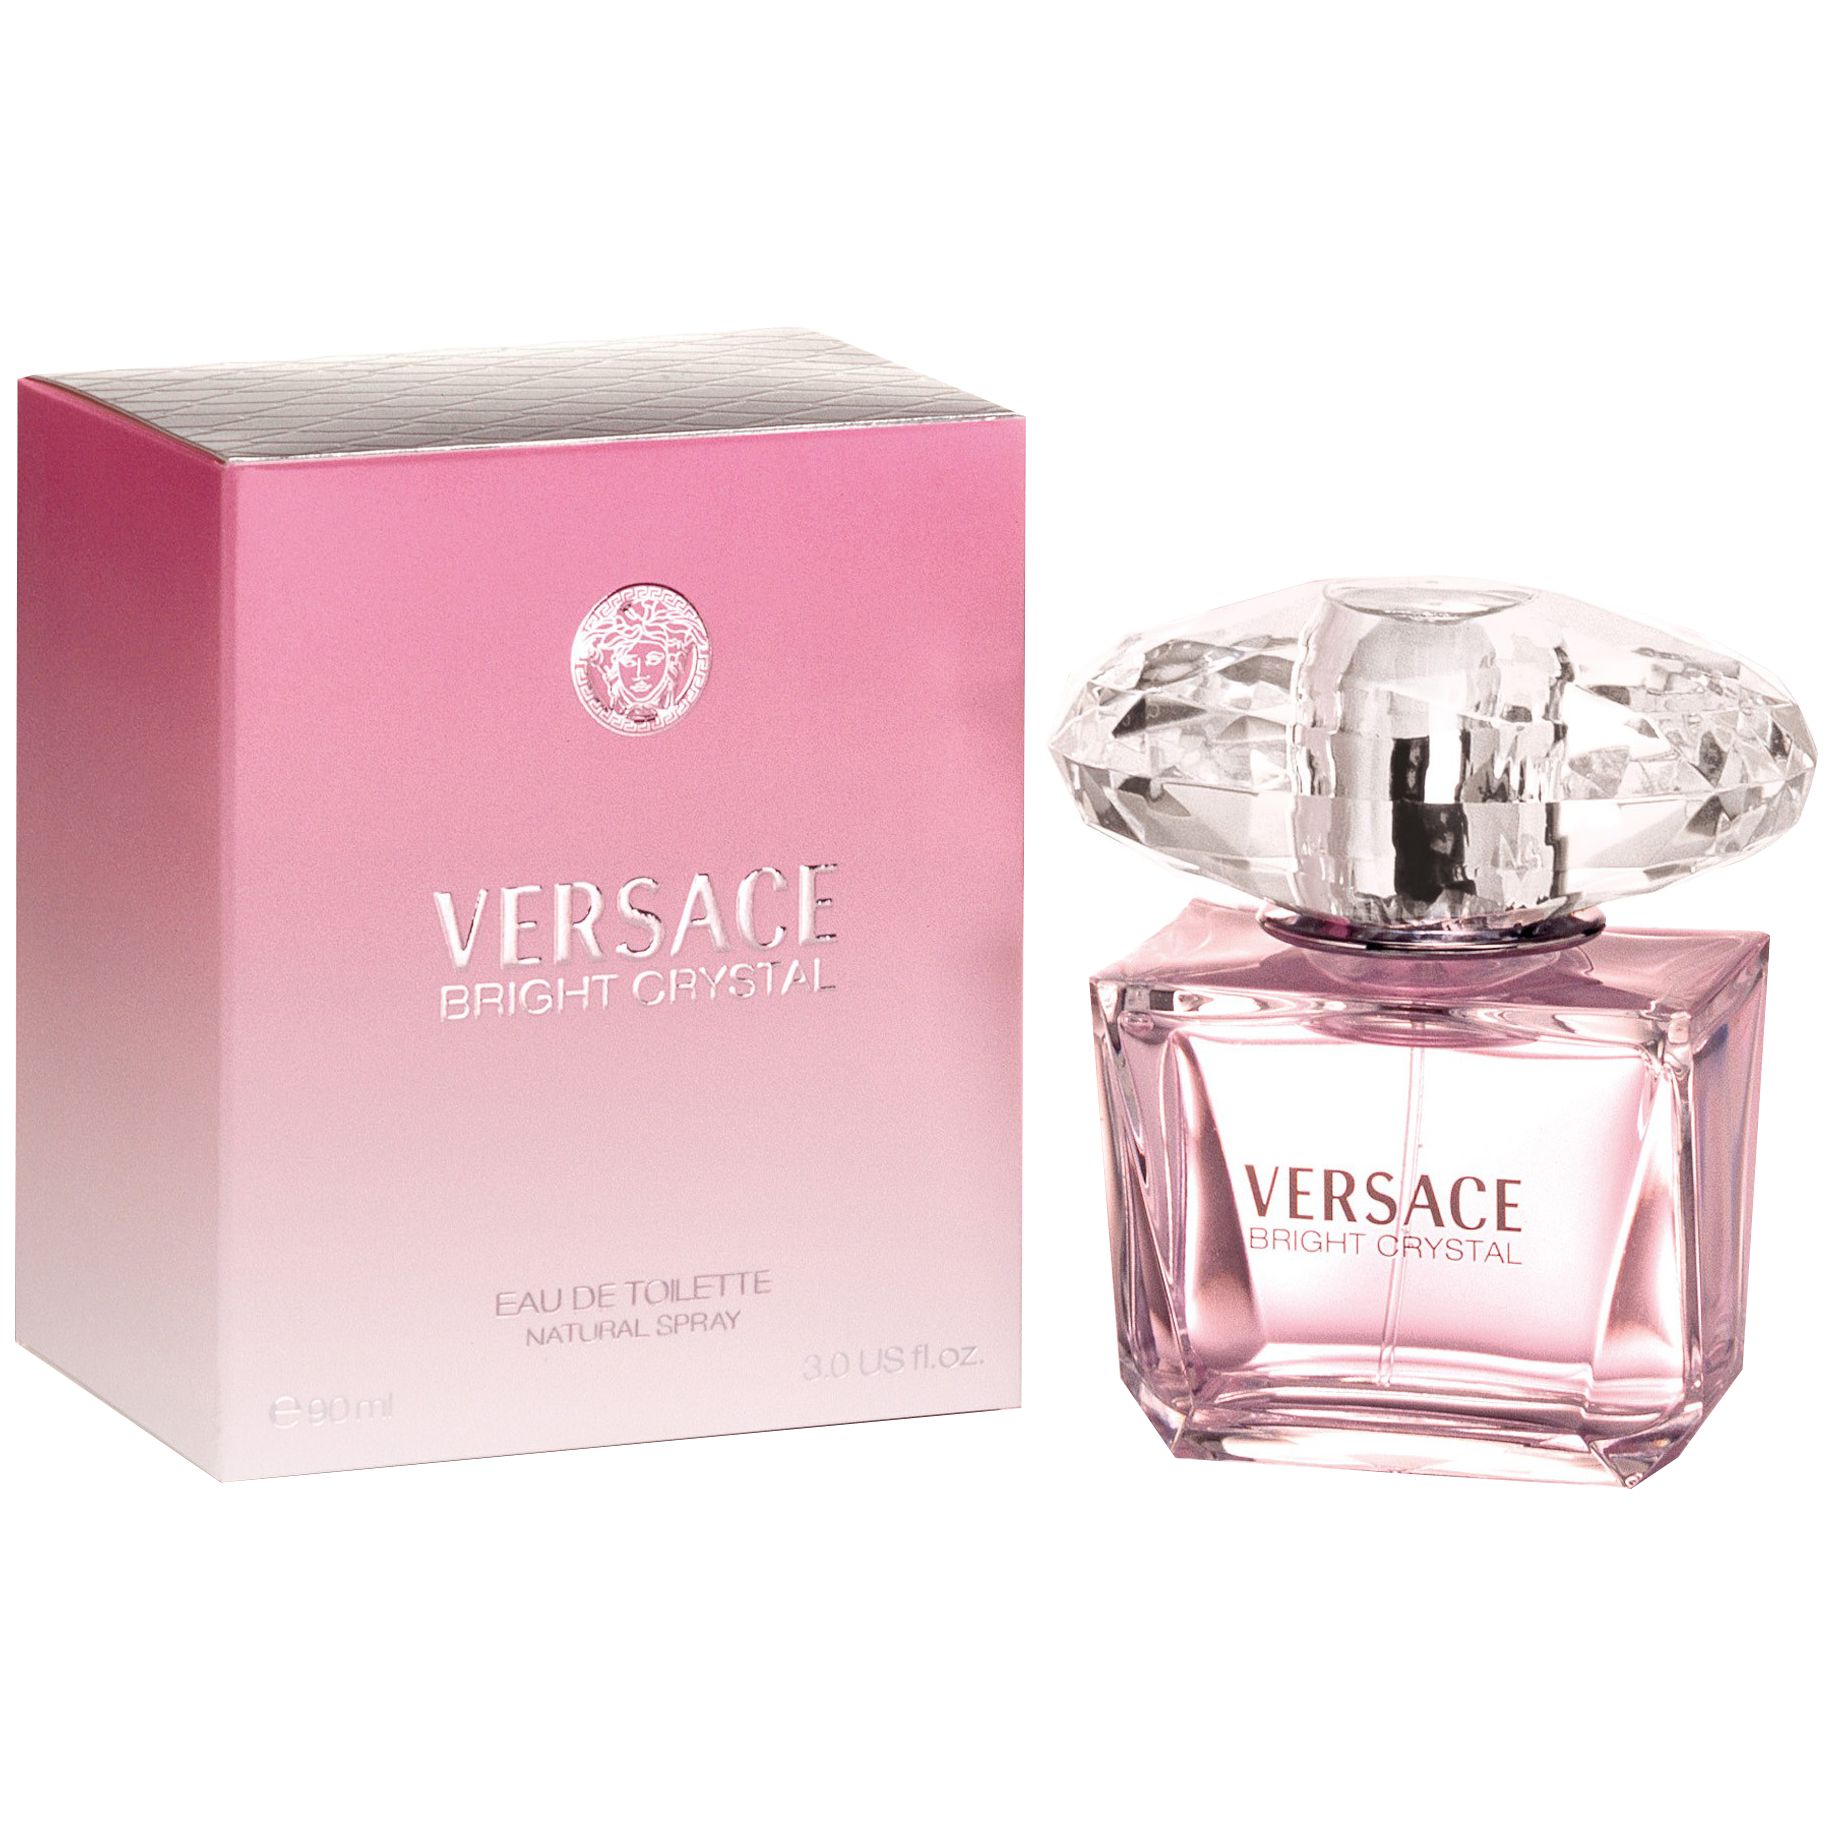 versace perfume bright crystal 50ml